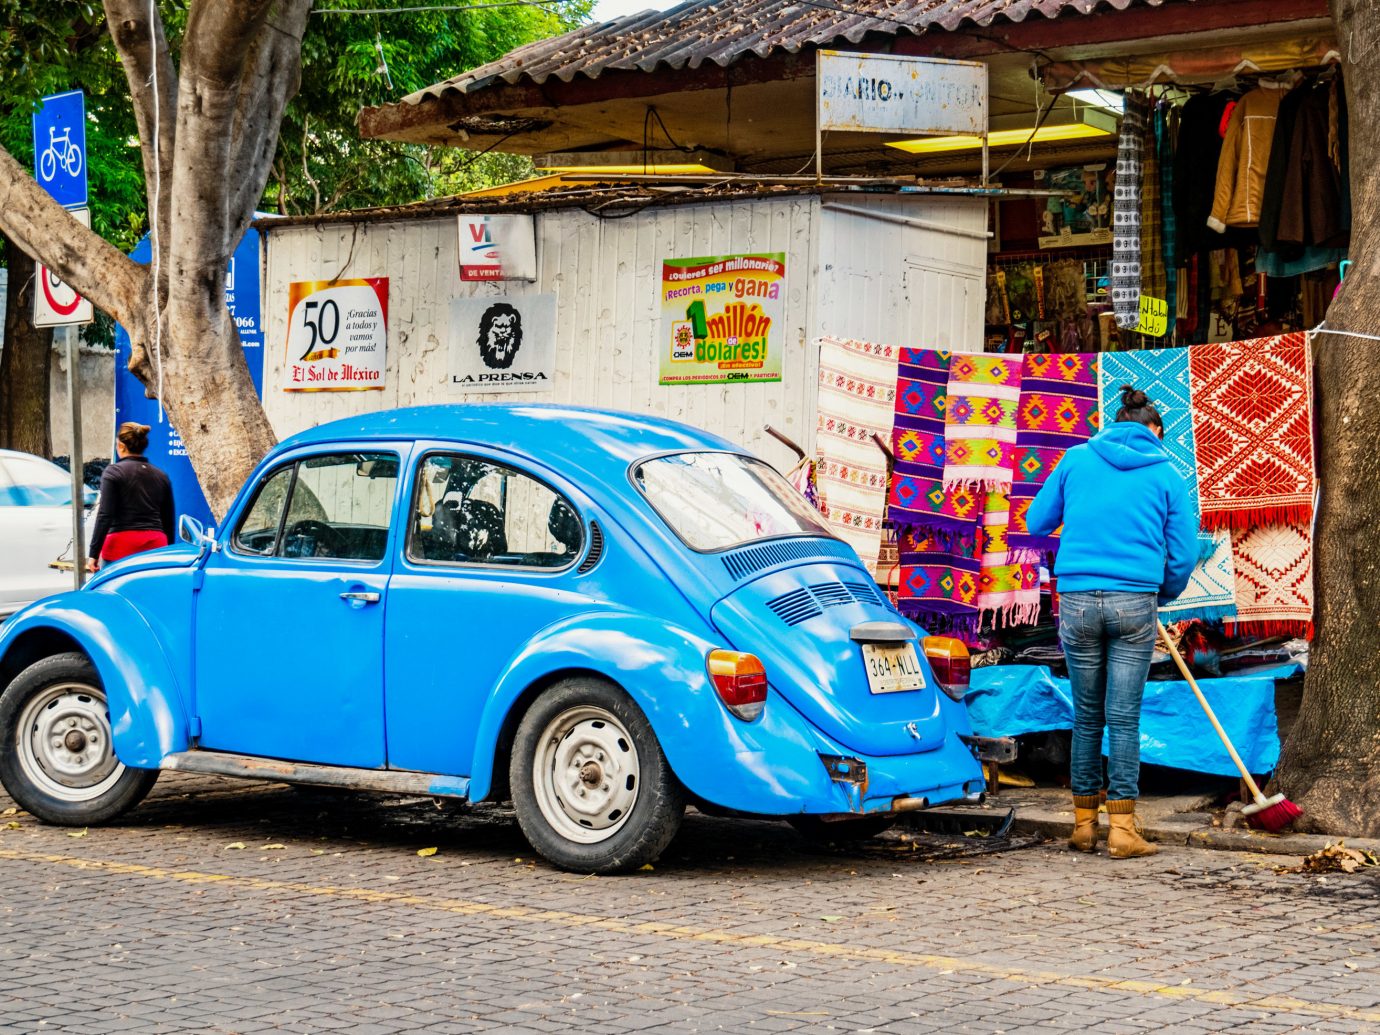 City Mexico City Trip Ideas outdoor building car motor vehicle vehicle volkswagen beetle automotive design Classic blue vintage car subcompact car street antique car parked compact car volkswagen automotive exterior